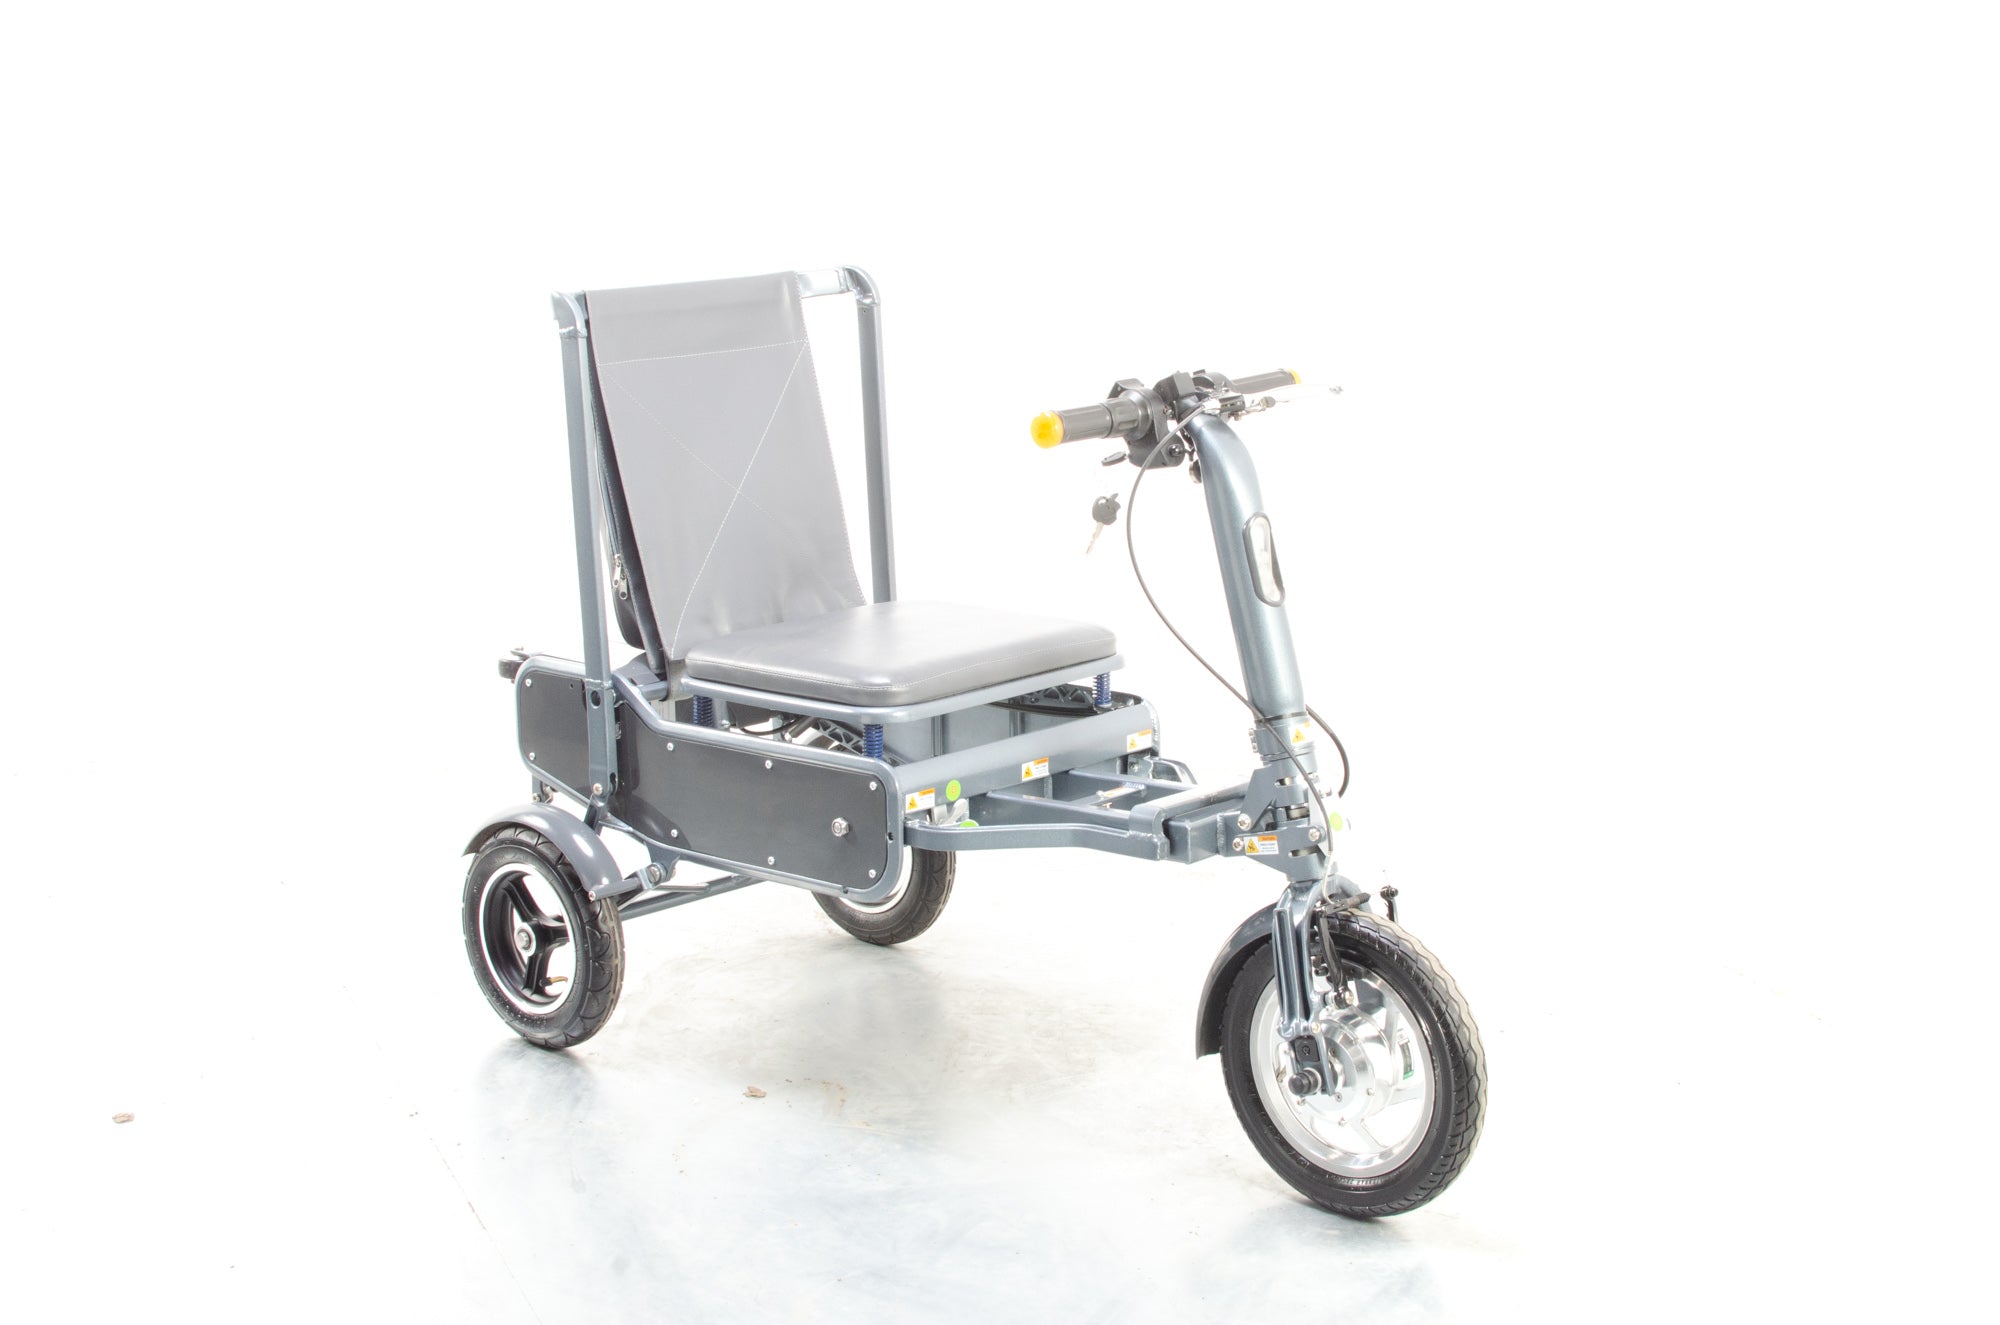 eFOLDI Mobility Scooter Lightweight Folding Electric 8mph MK1.5